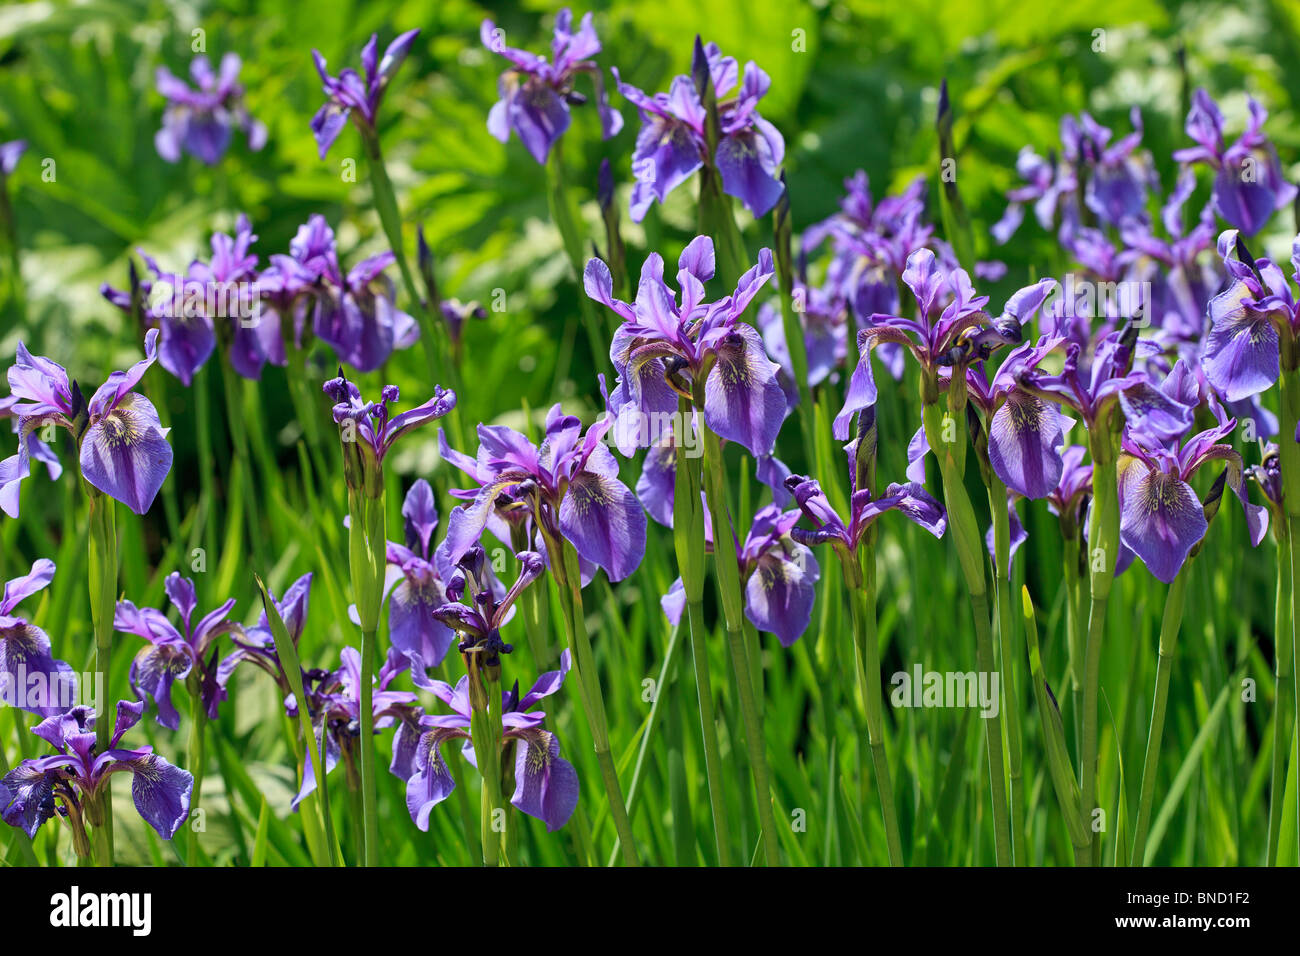 Vibrant scene of  purple Irises against bright greens of spring foliage Stock Photo